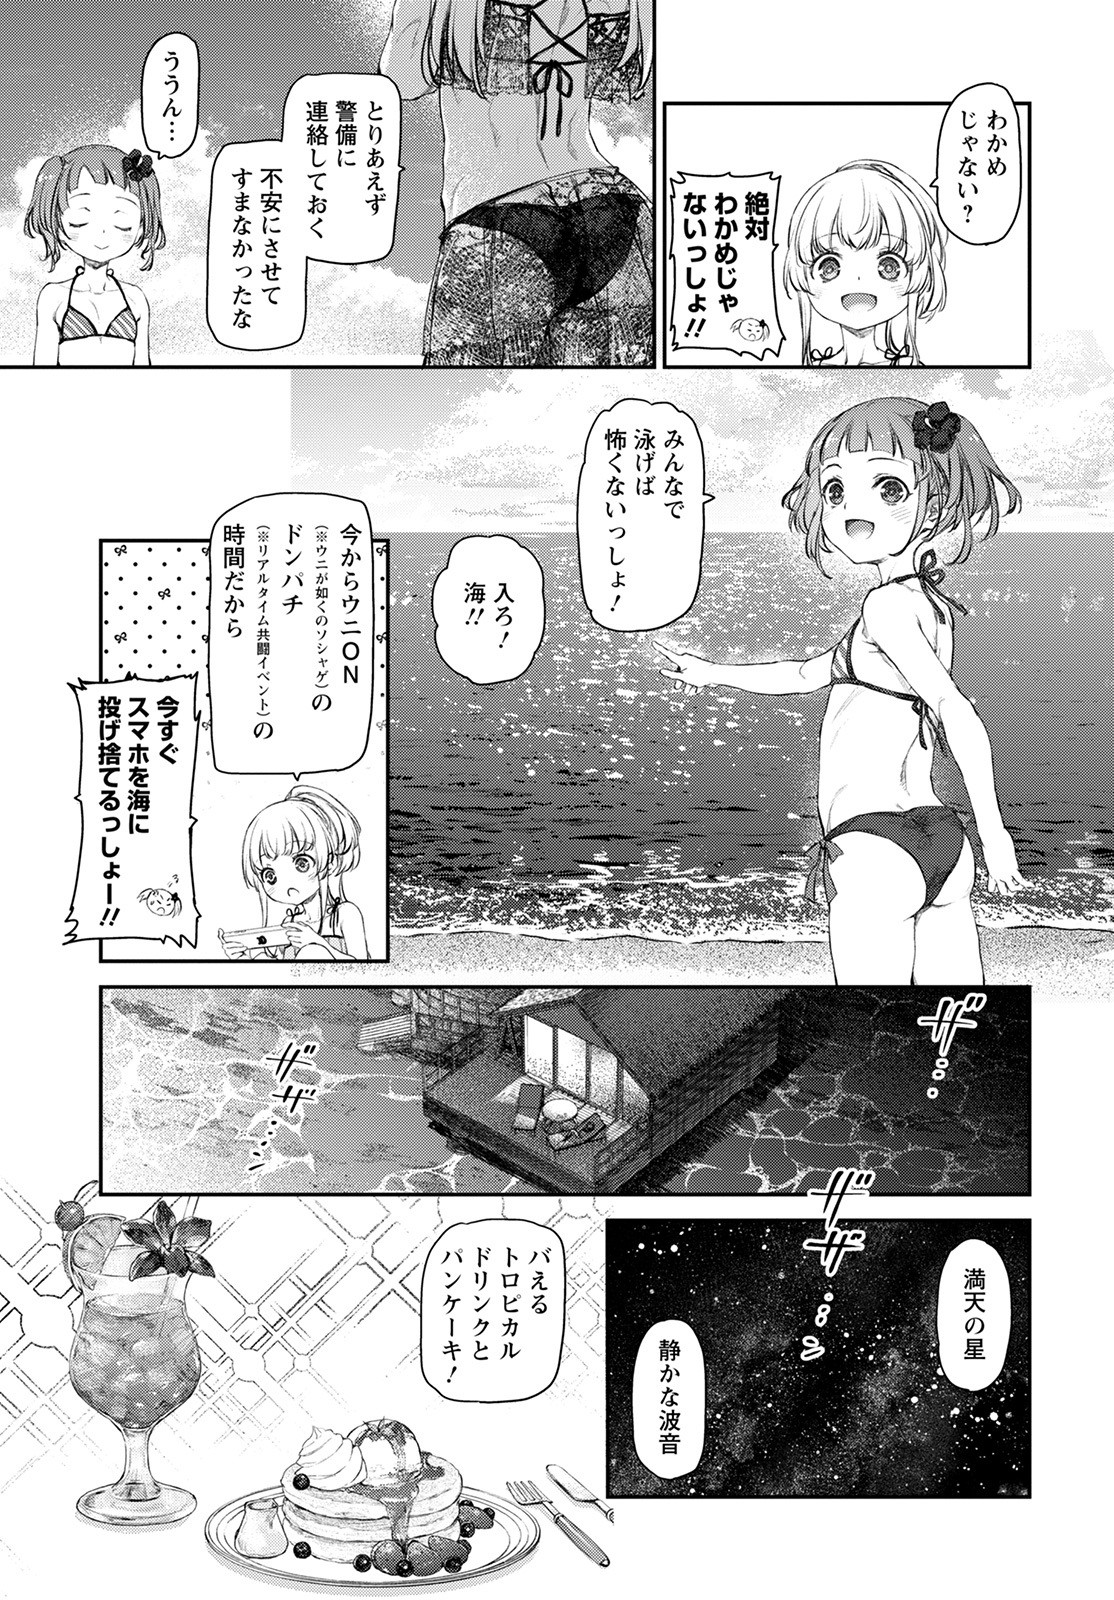 Uchi no Maid ga Uzasugiru! - Chapter 51 - Page 9